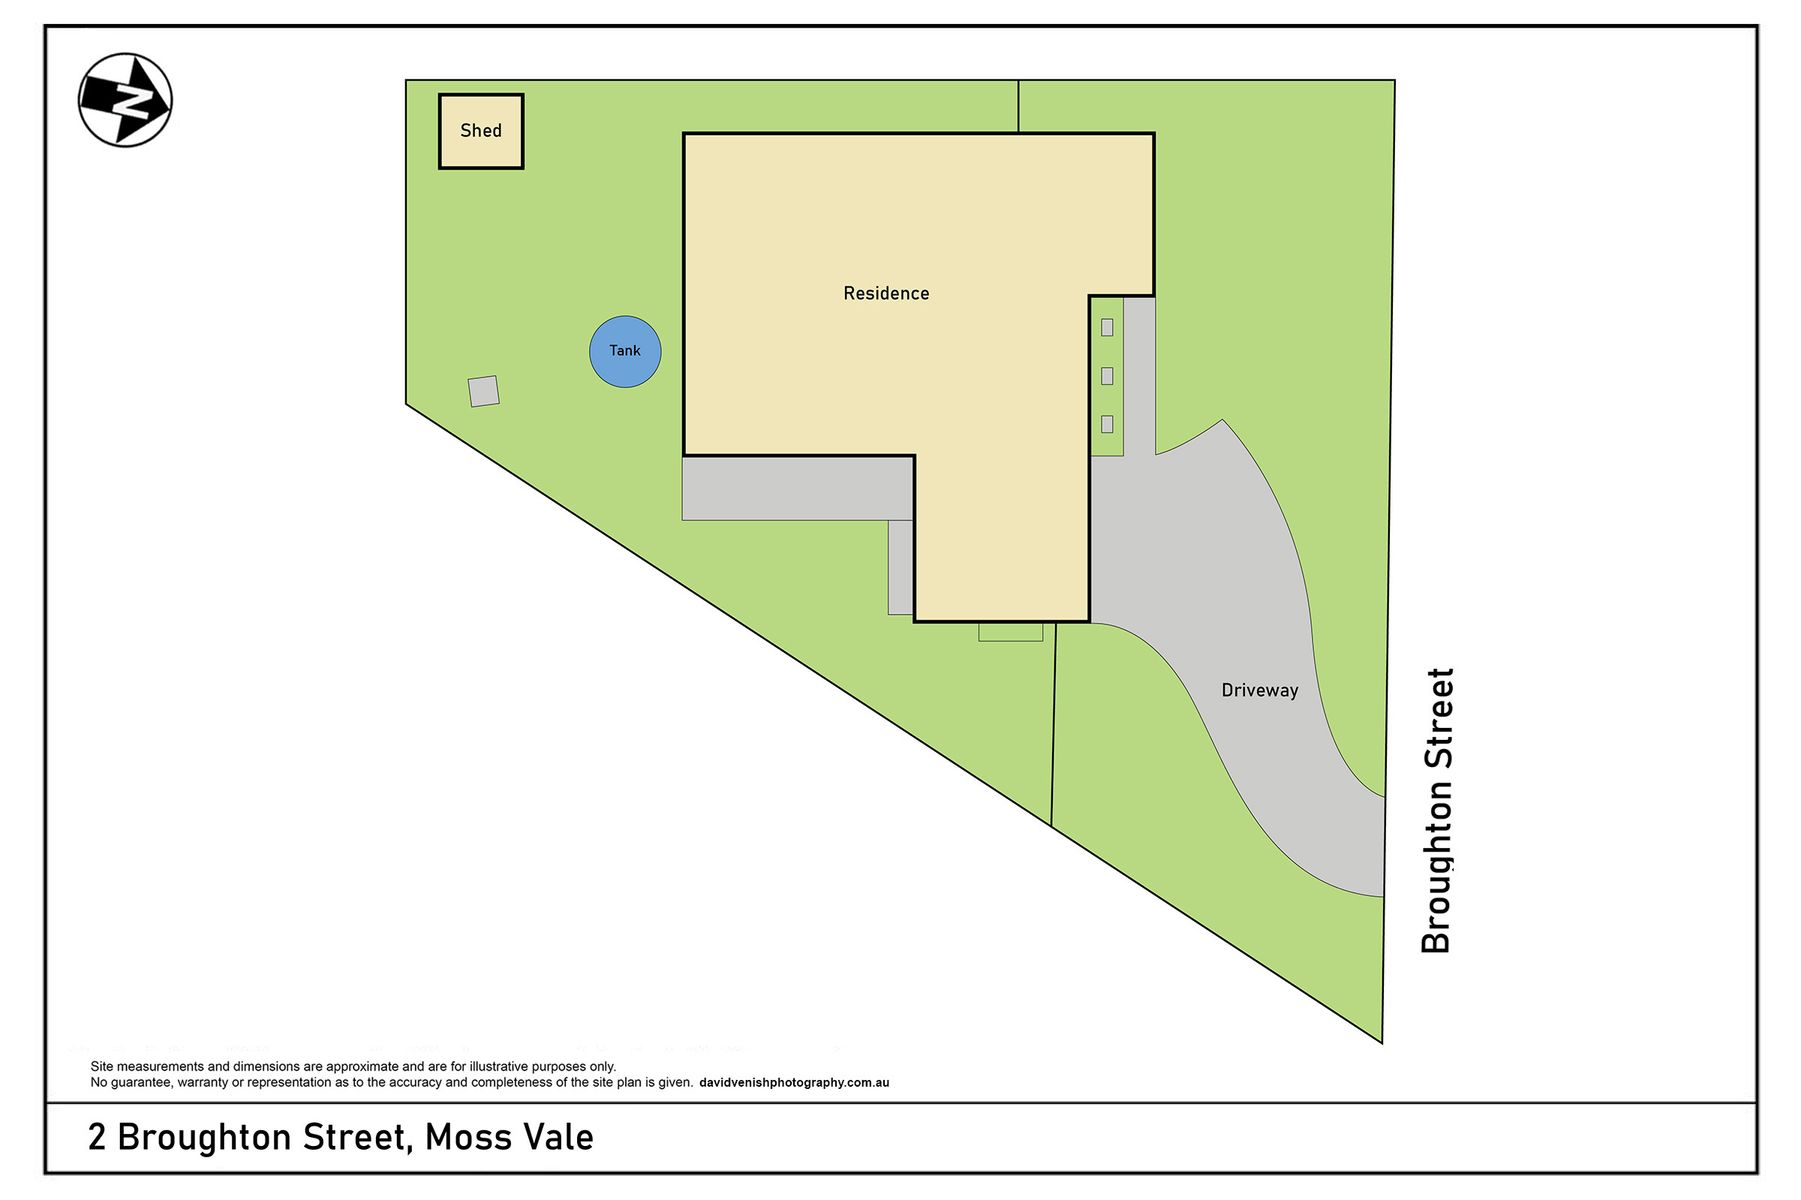 2 Broughton Street, Moss Vale   Site Plan